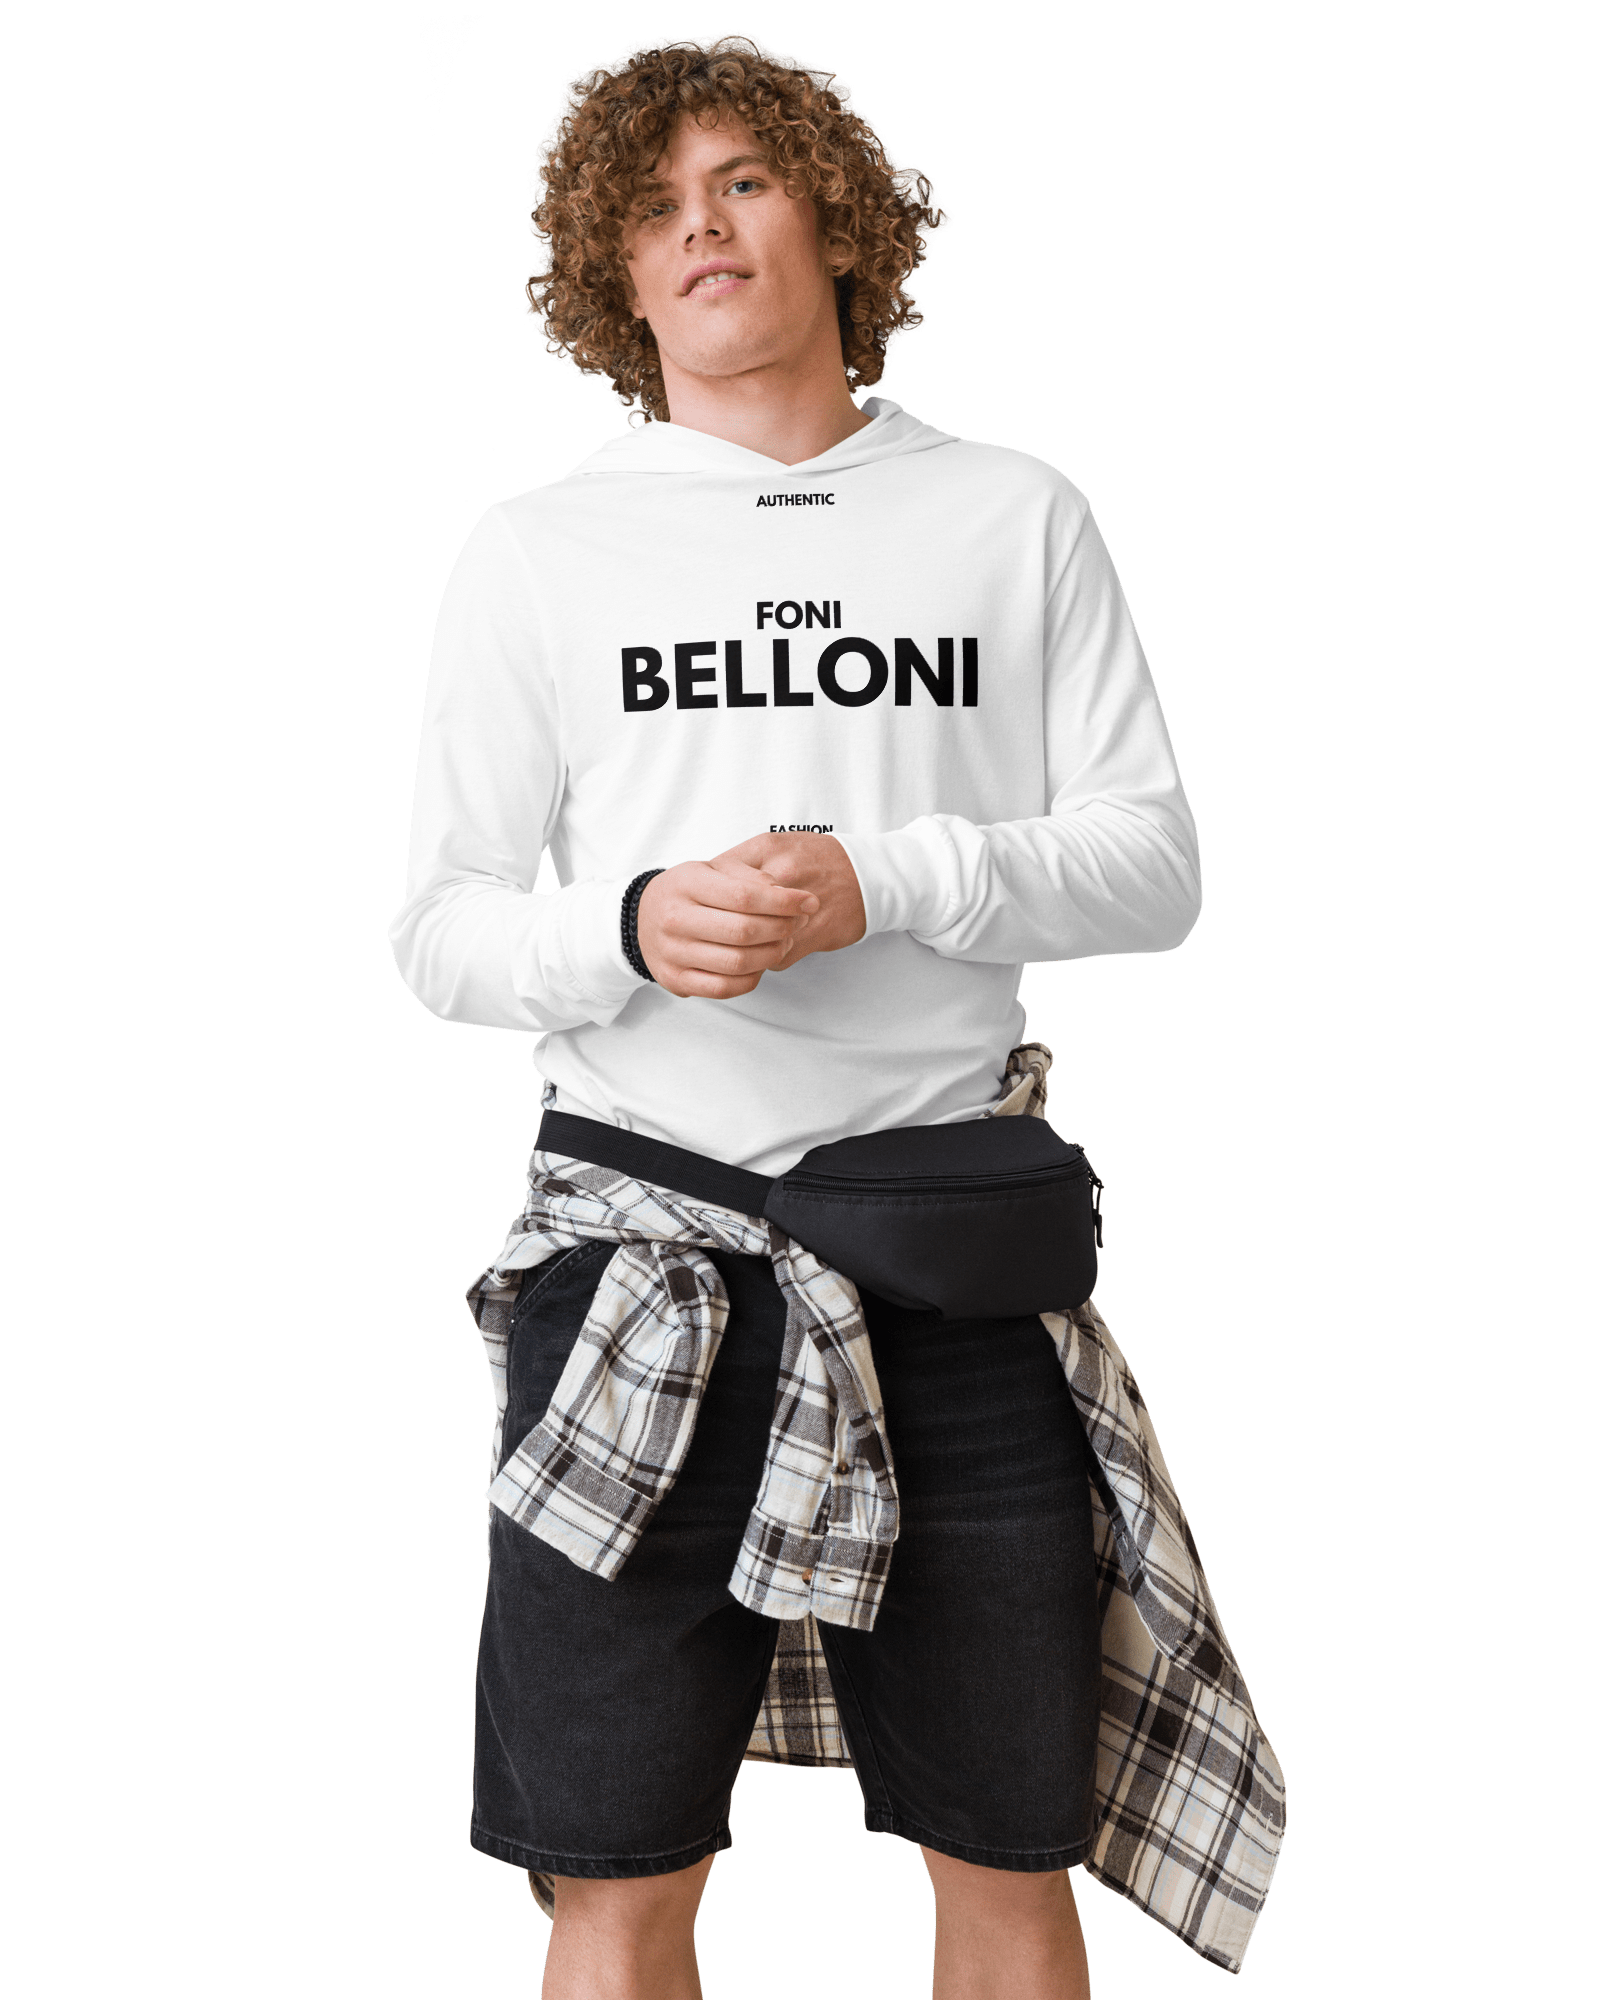 Foni Belloni Authentic Fashion Hooded Long-Sleeve Shirt long sleeve shirts Jolly & Goode